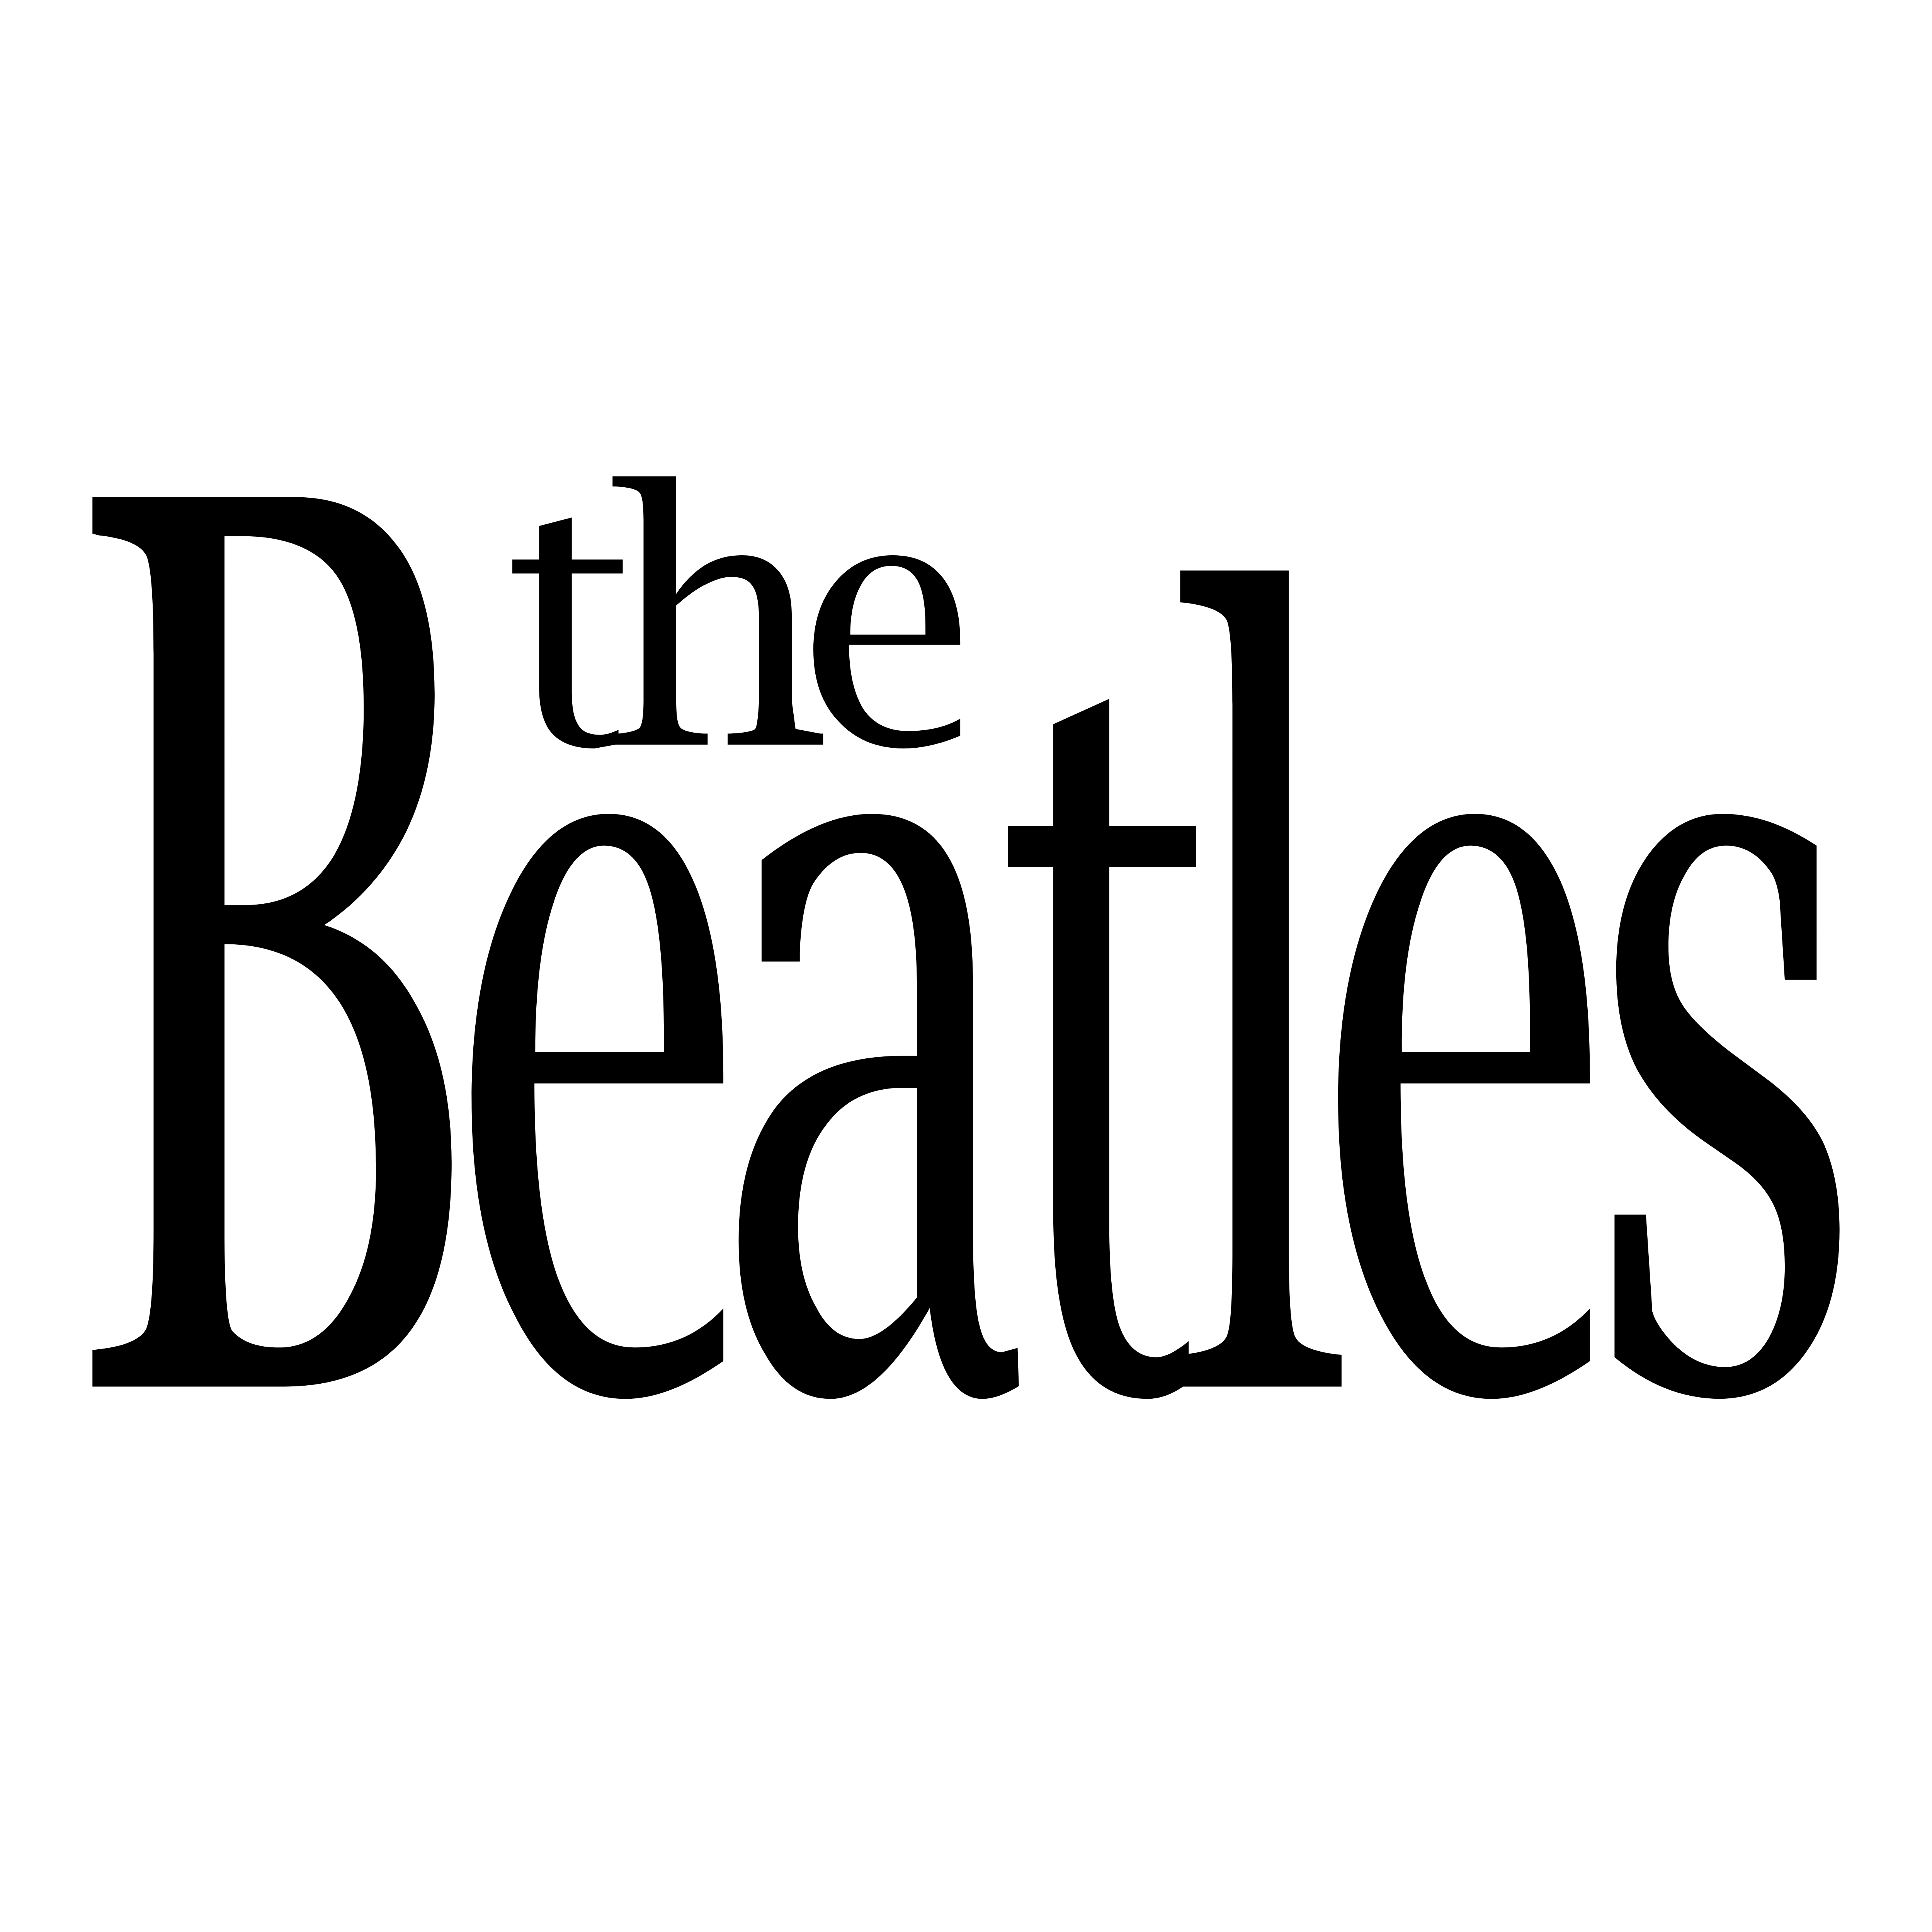 The Beatles - Logos Download